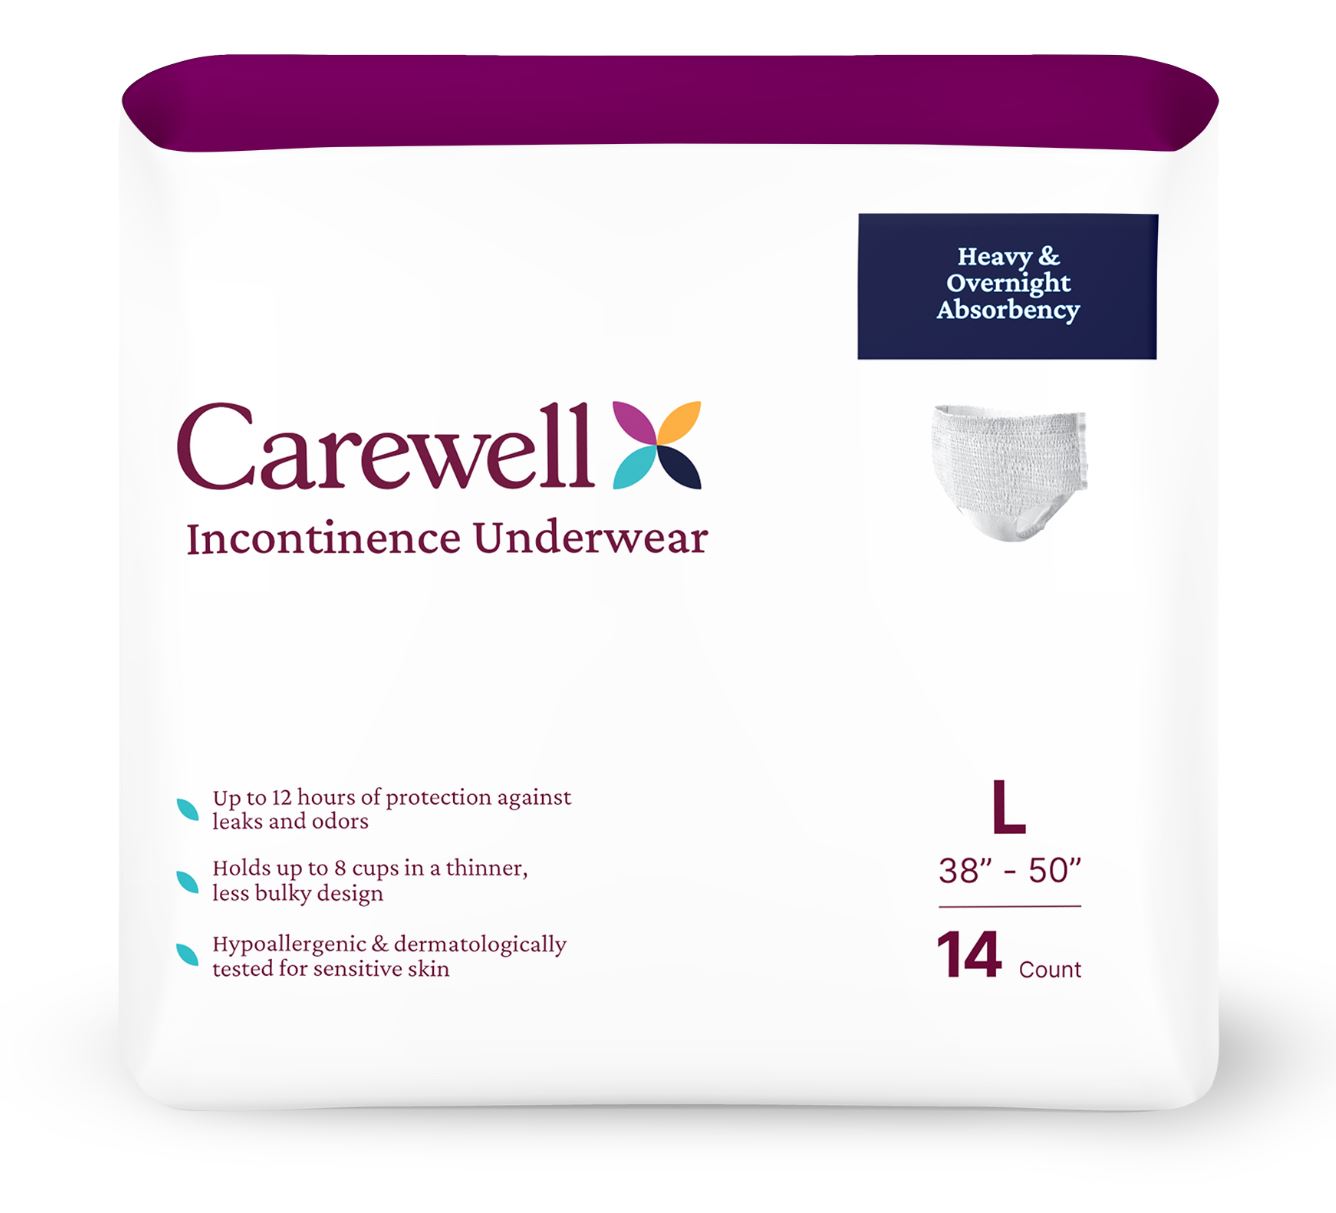 Carewell Incontinence Underwear